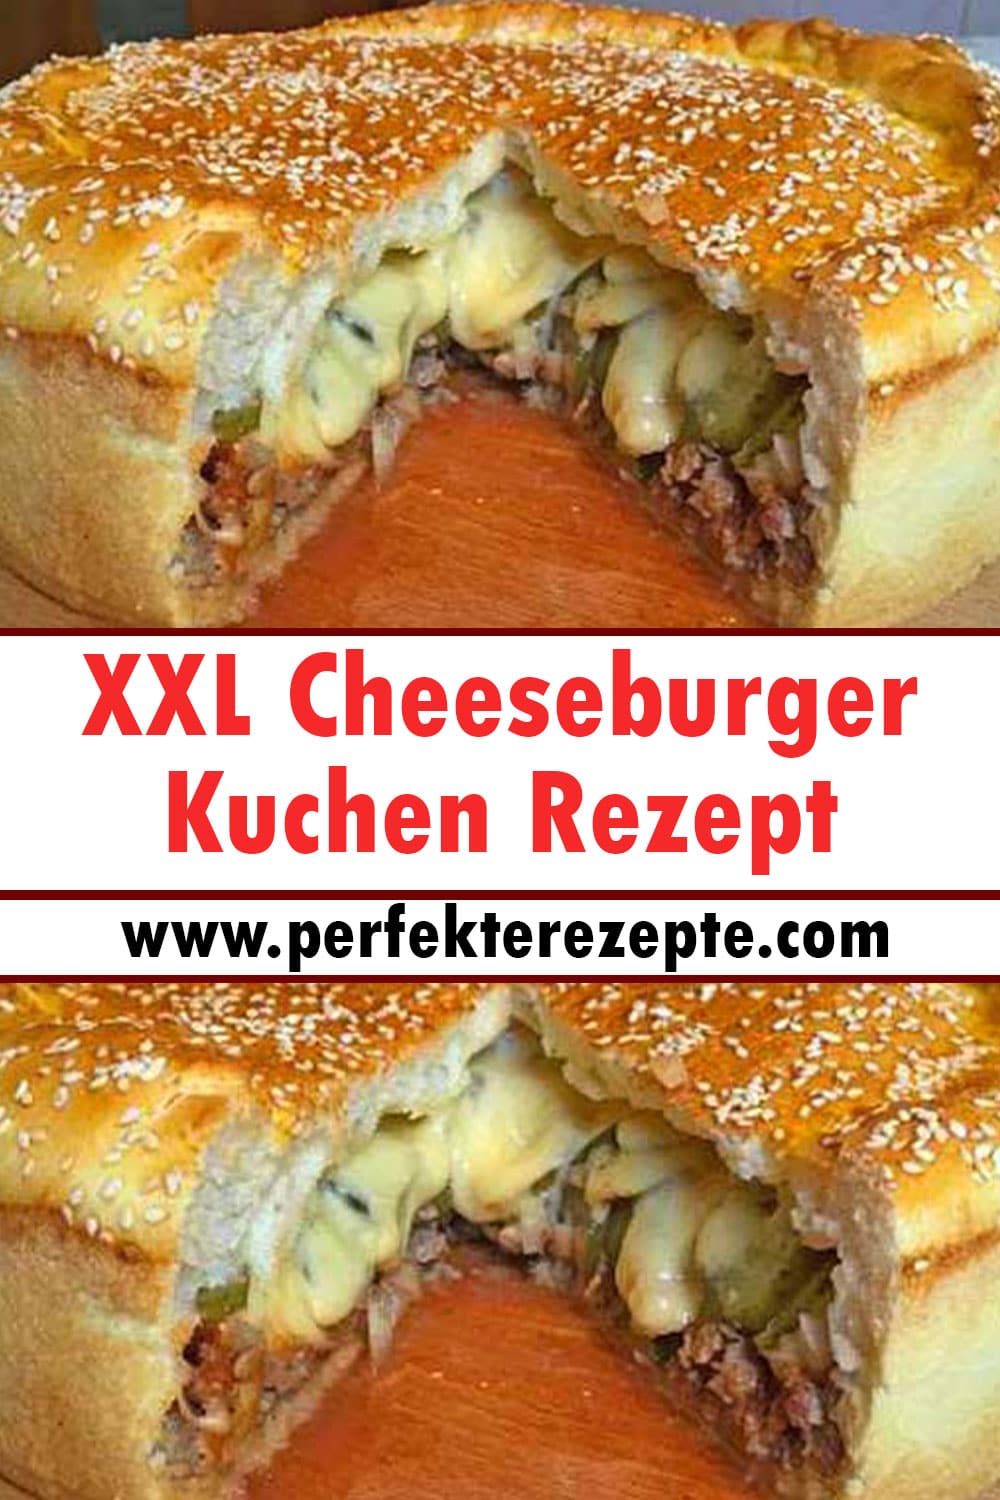 XXL Cheeseburger Kuchen Rezept, unglaublich lecker!